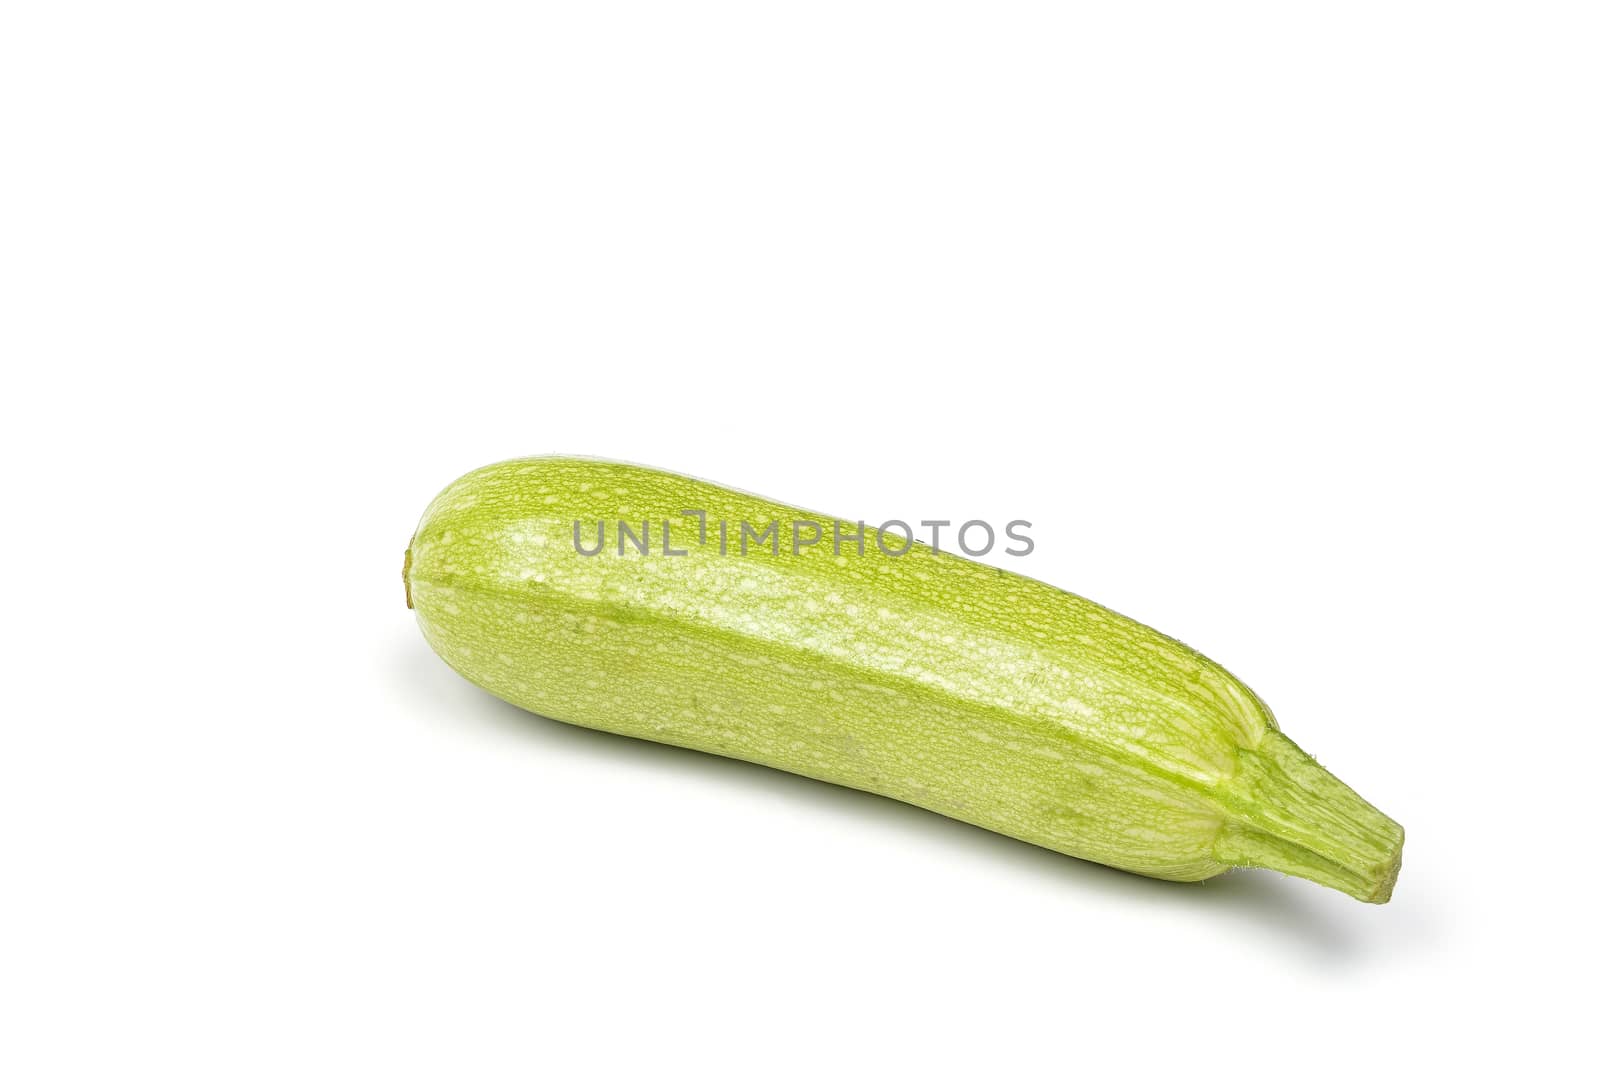 fresh green zucchini  on white background